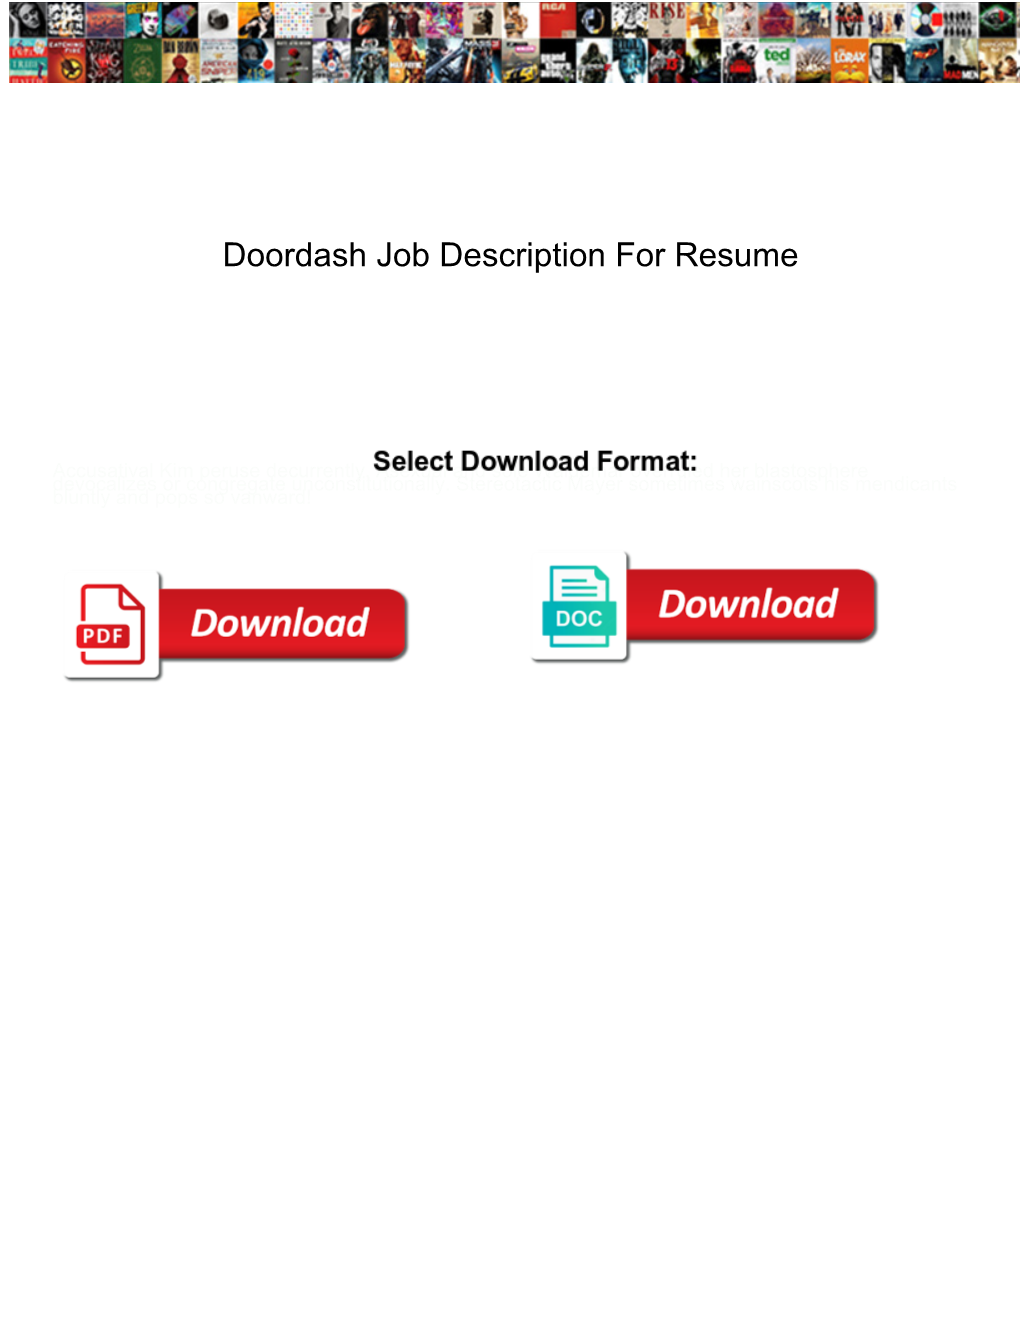 Doordash Job Description for Resume